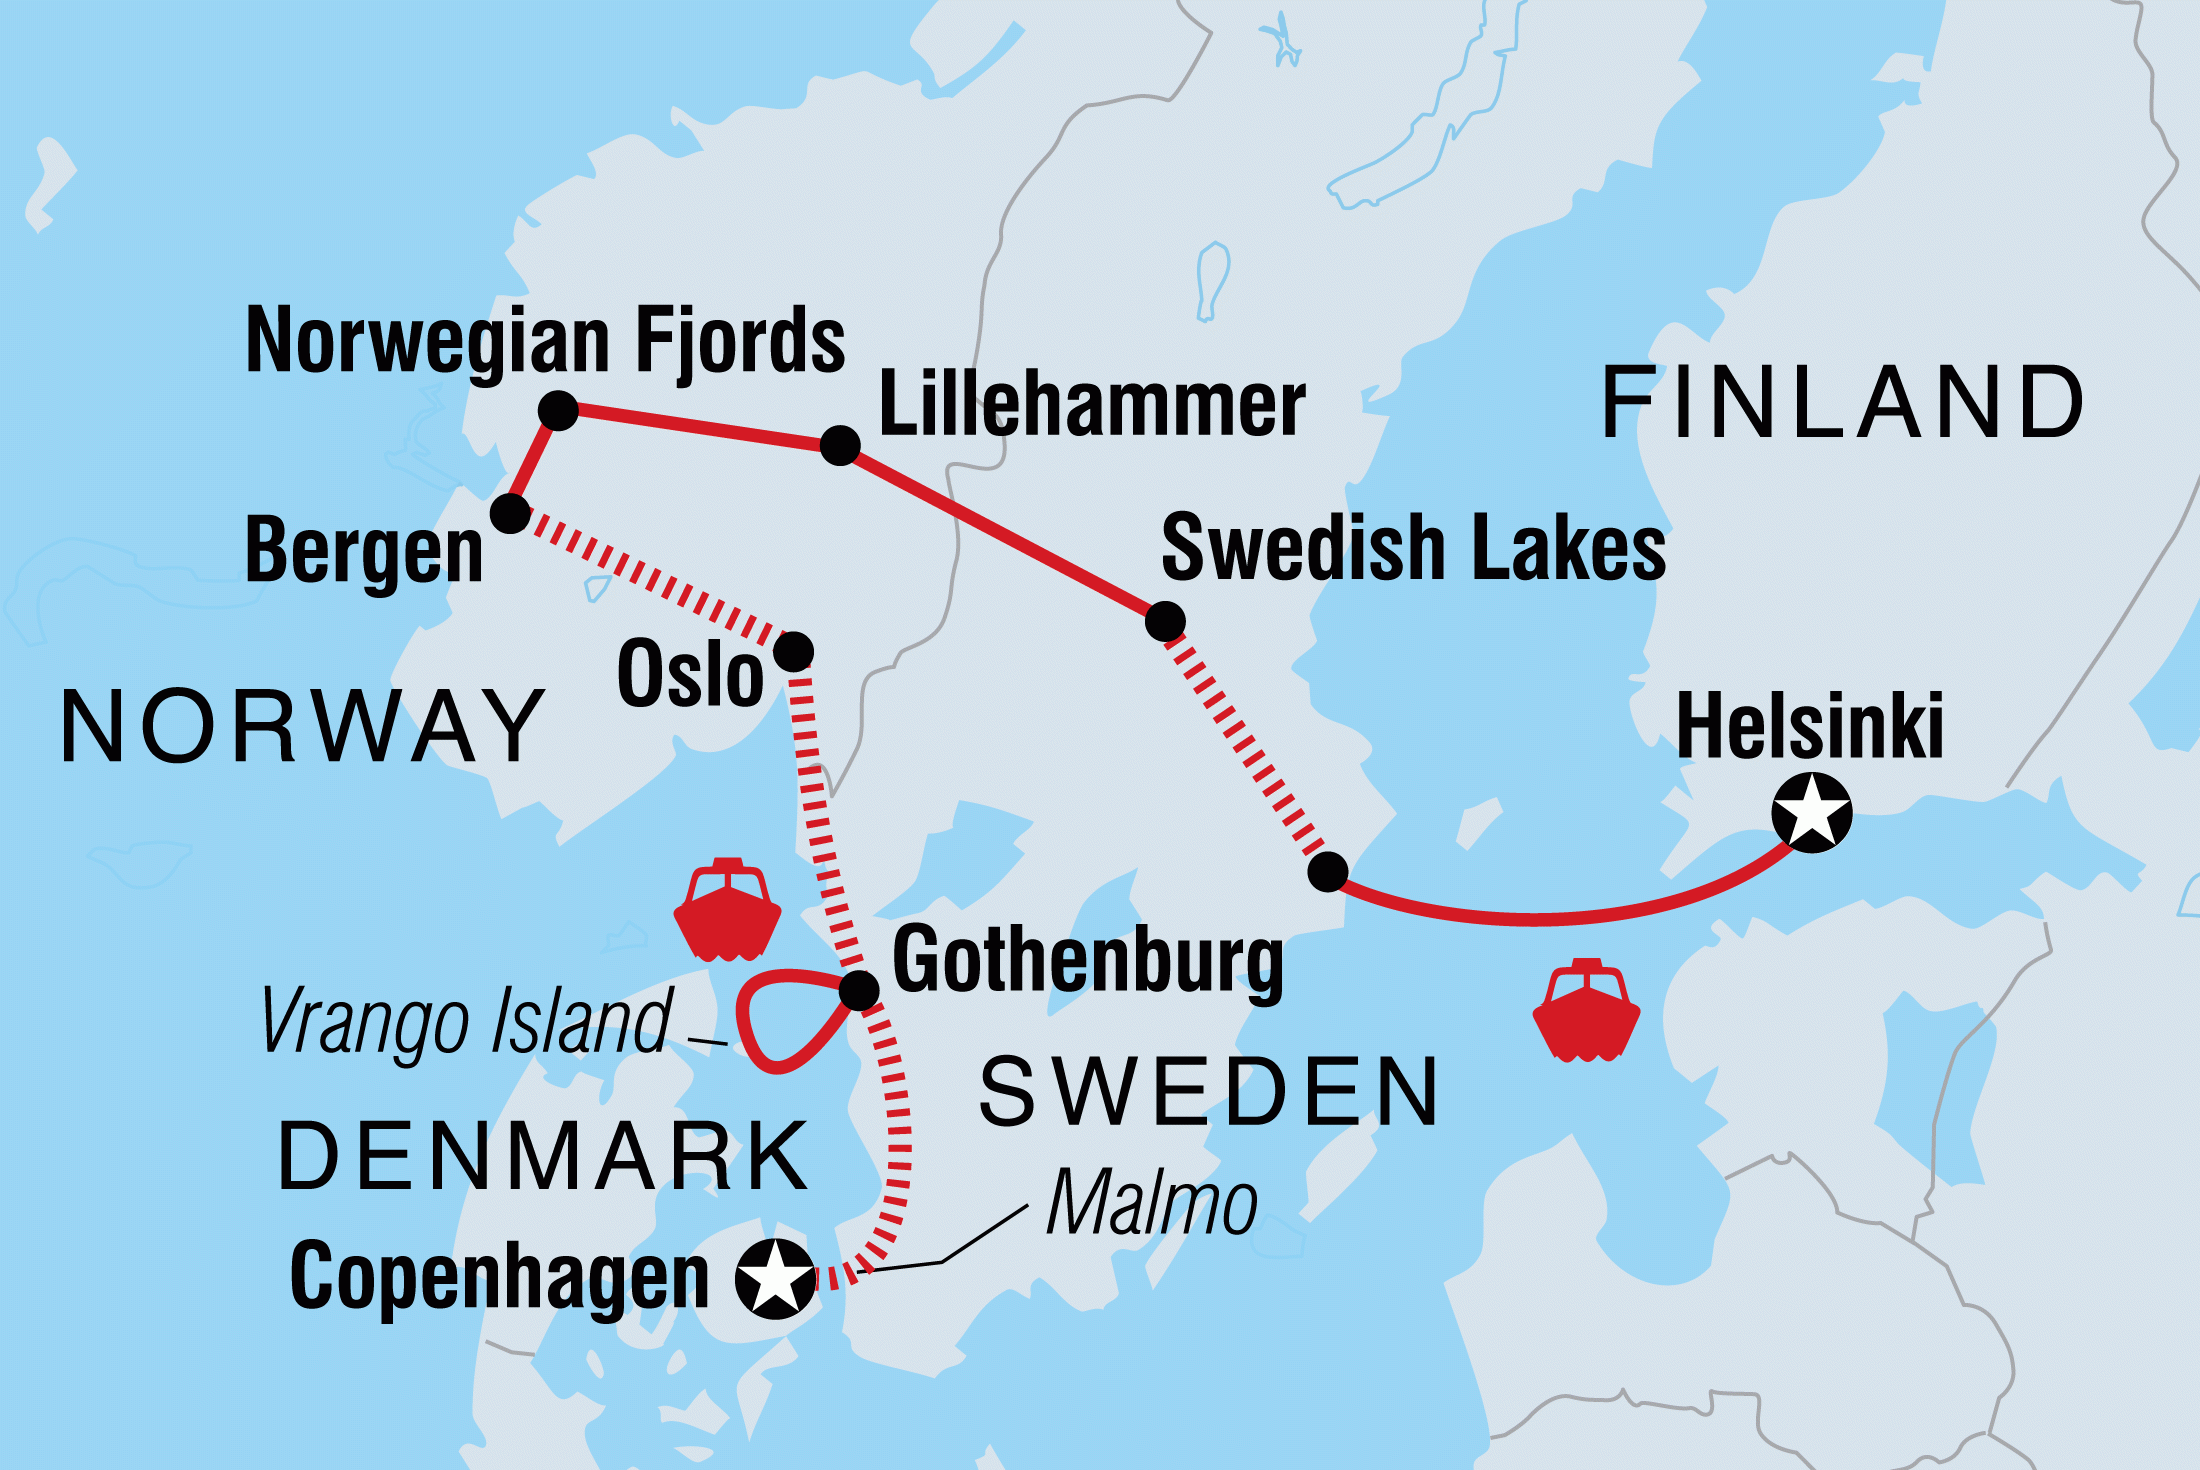 scandinavia land tours